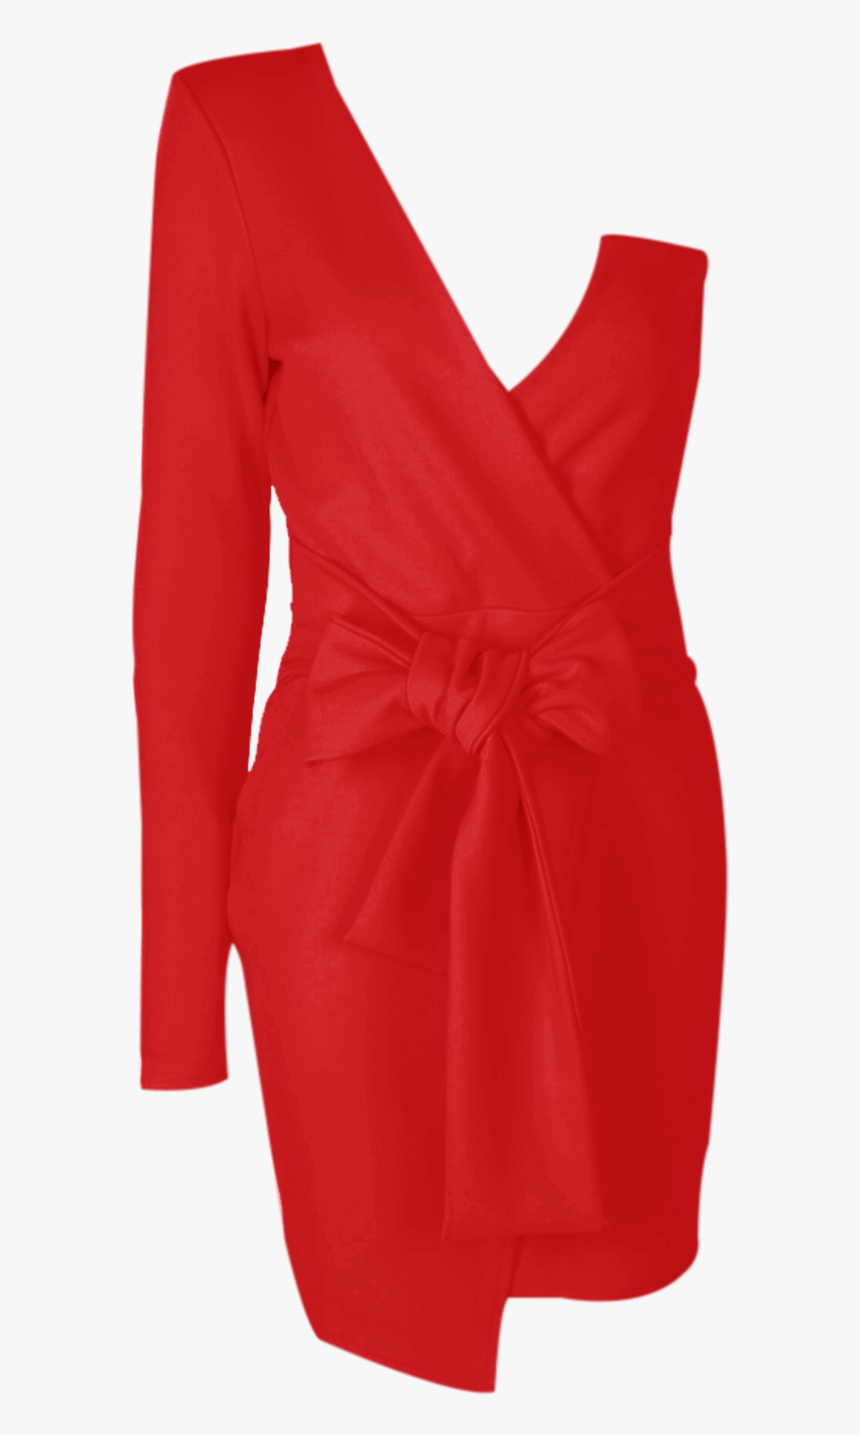 Transparent Red Dress Png, Png Download, Free Download